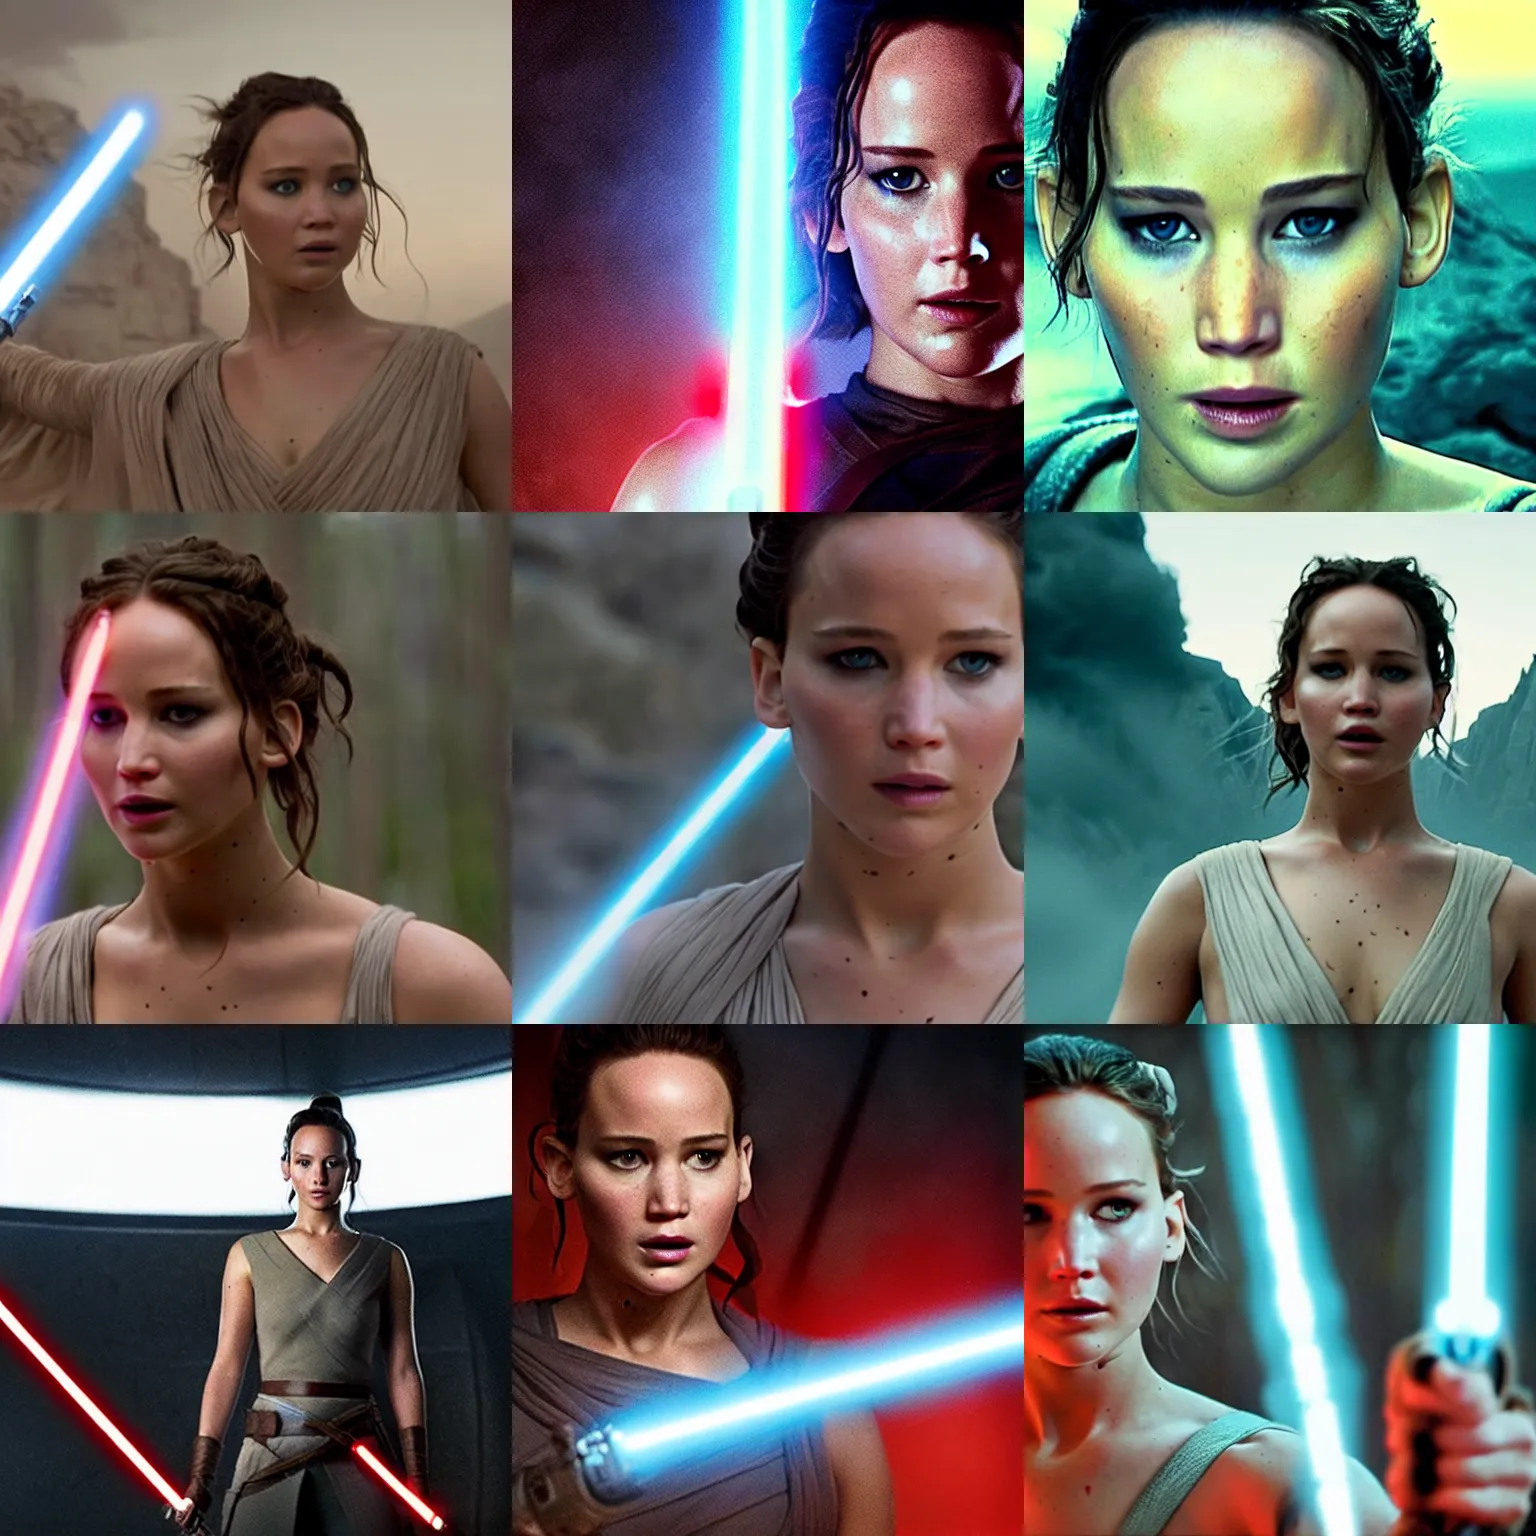 Prompt: Jennifer Lawrence as Rey, holding a lightsaber, headshot, film still from 'Star Wars: The Last Jedi'